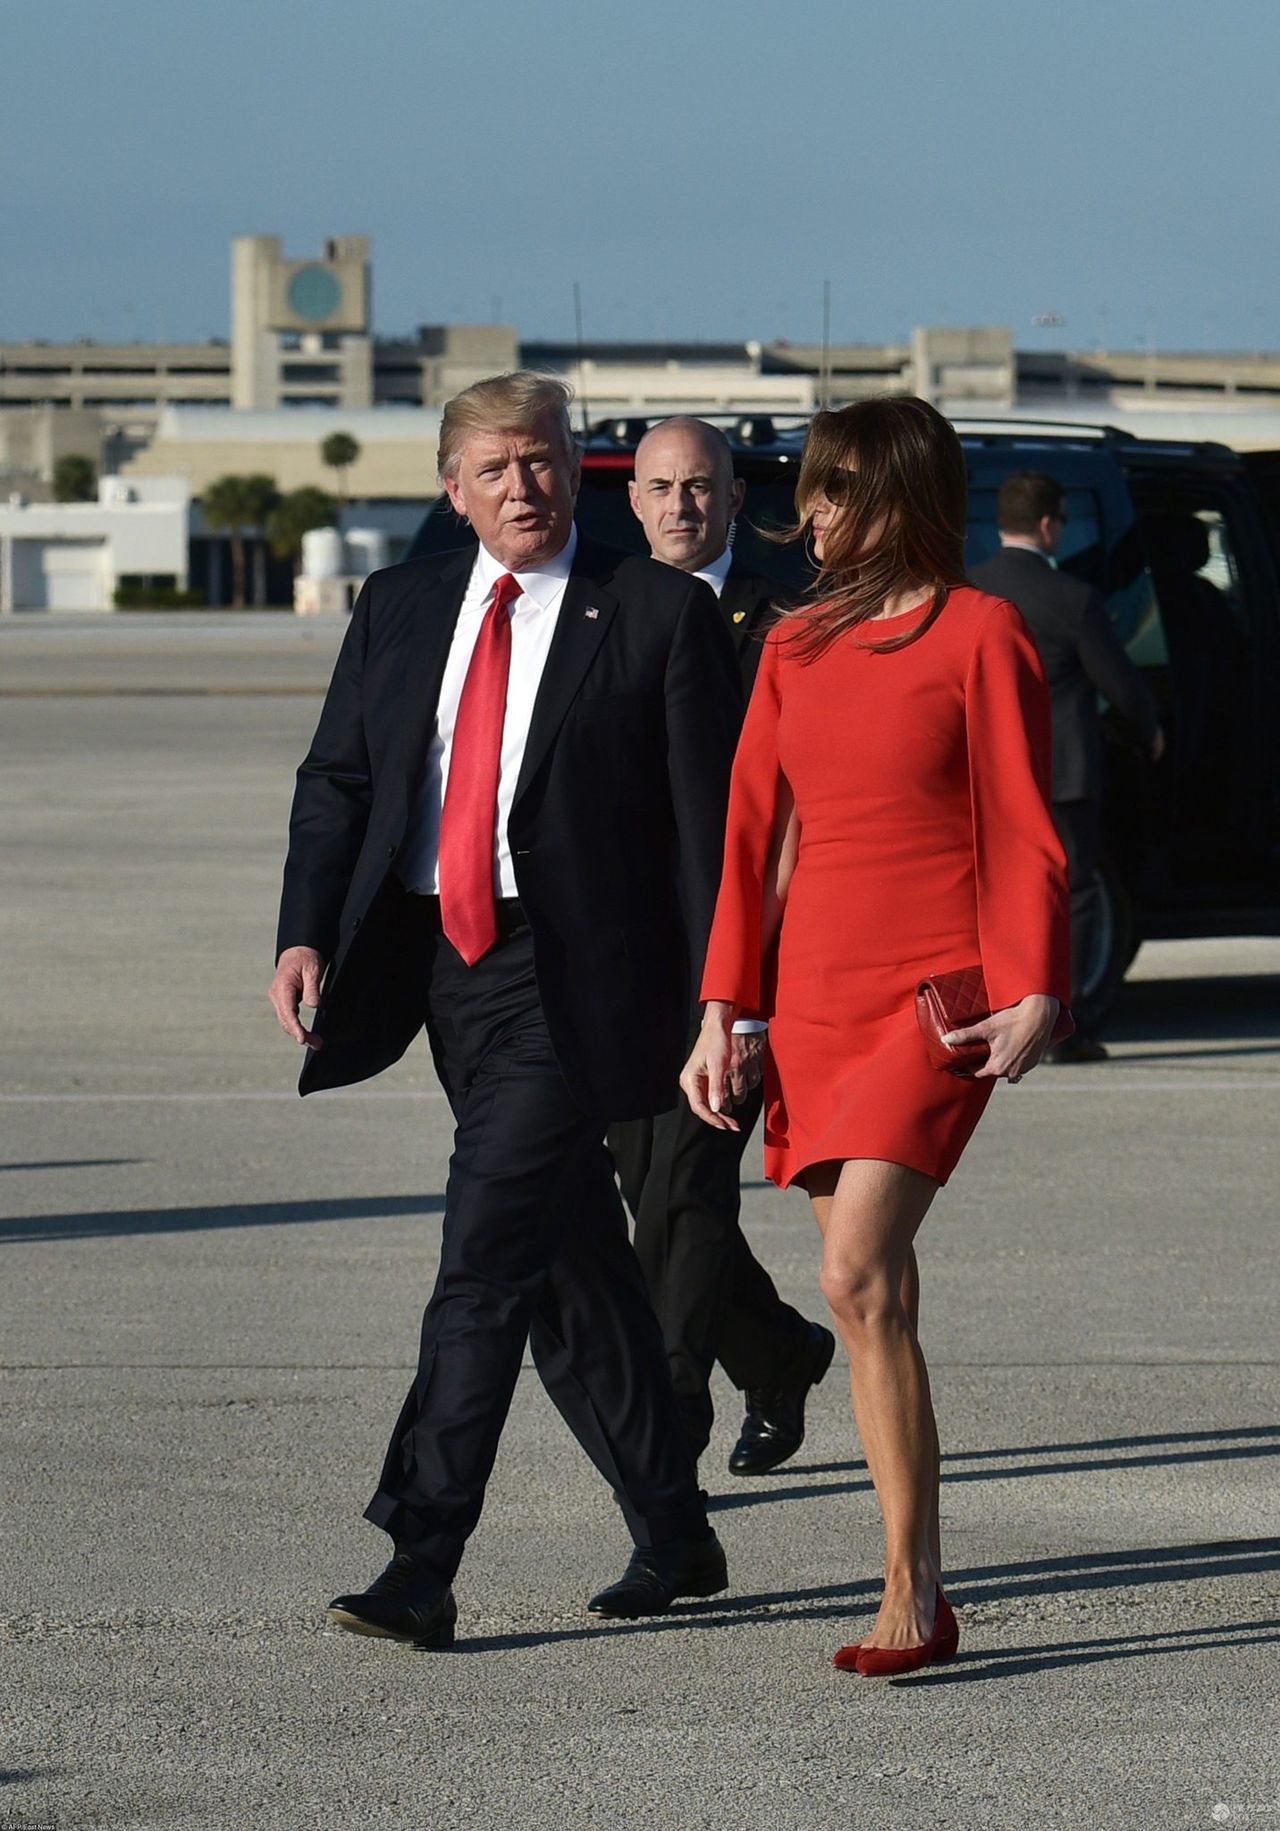 Donald Trump i Melania Trump w sukience mini